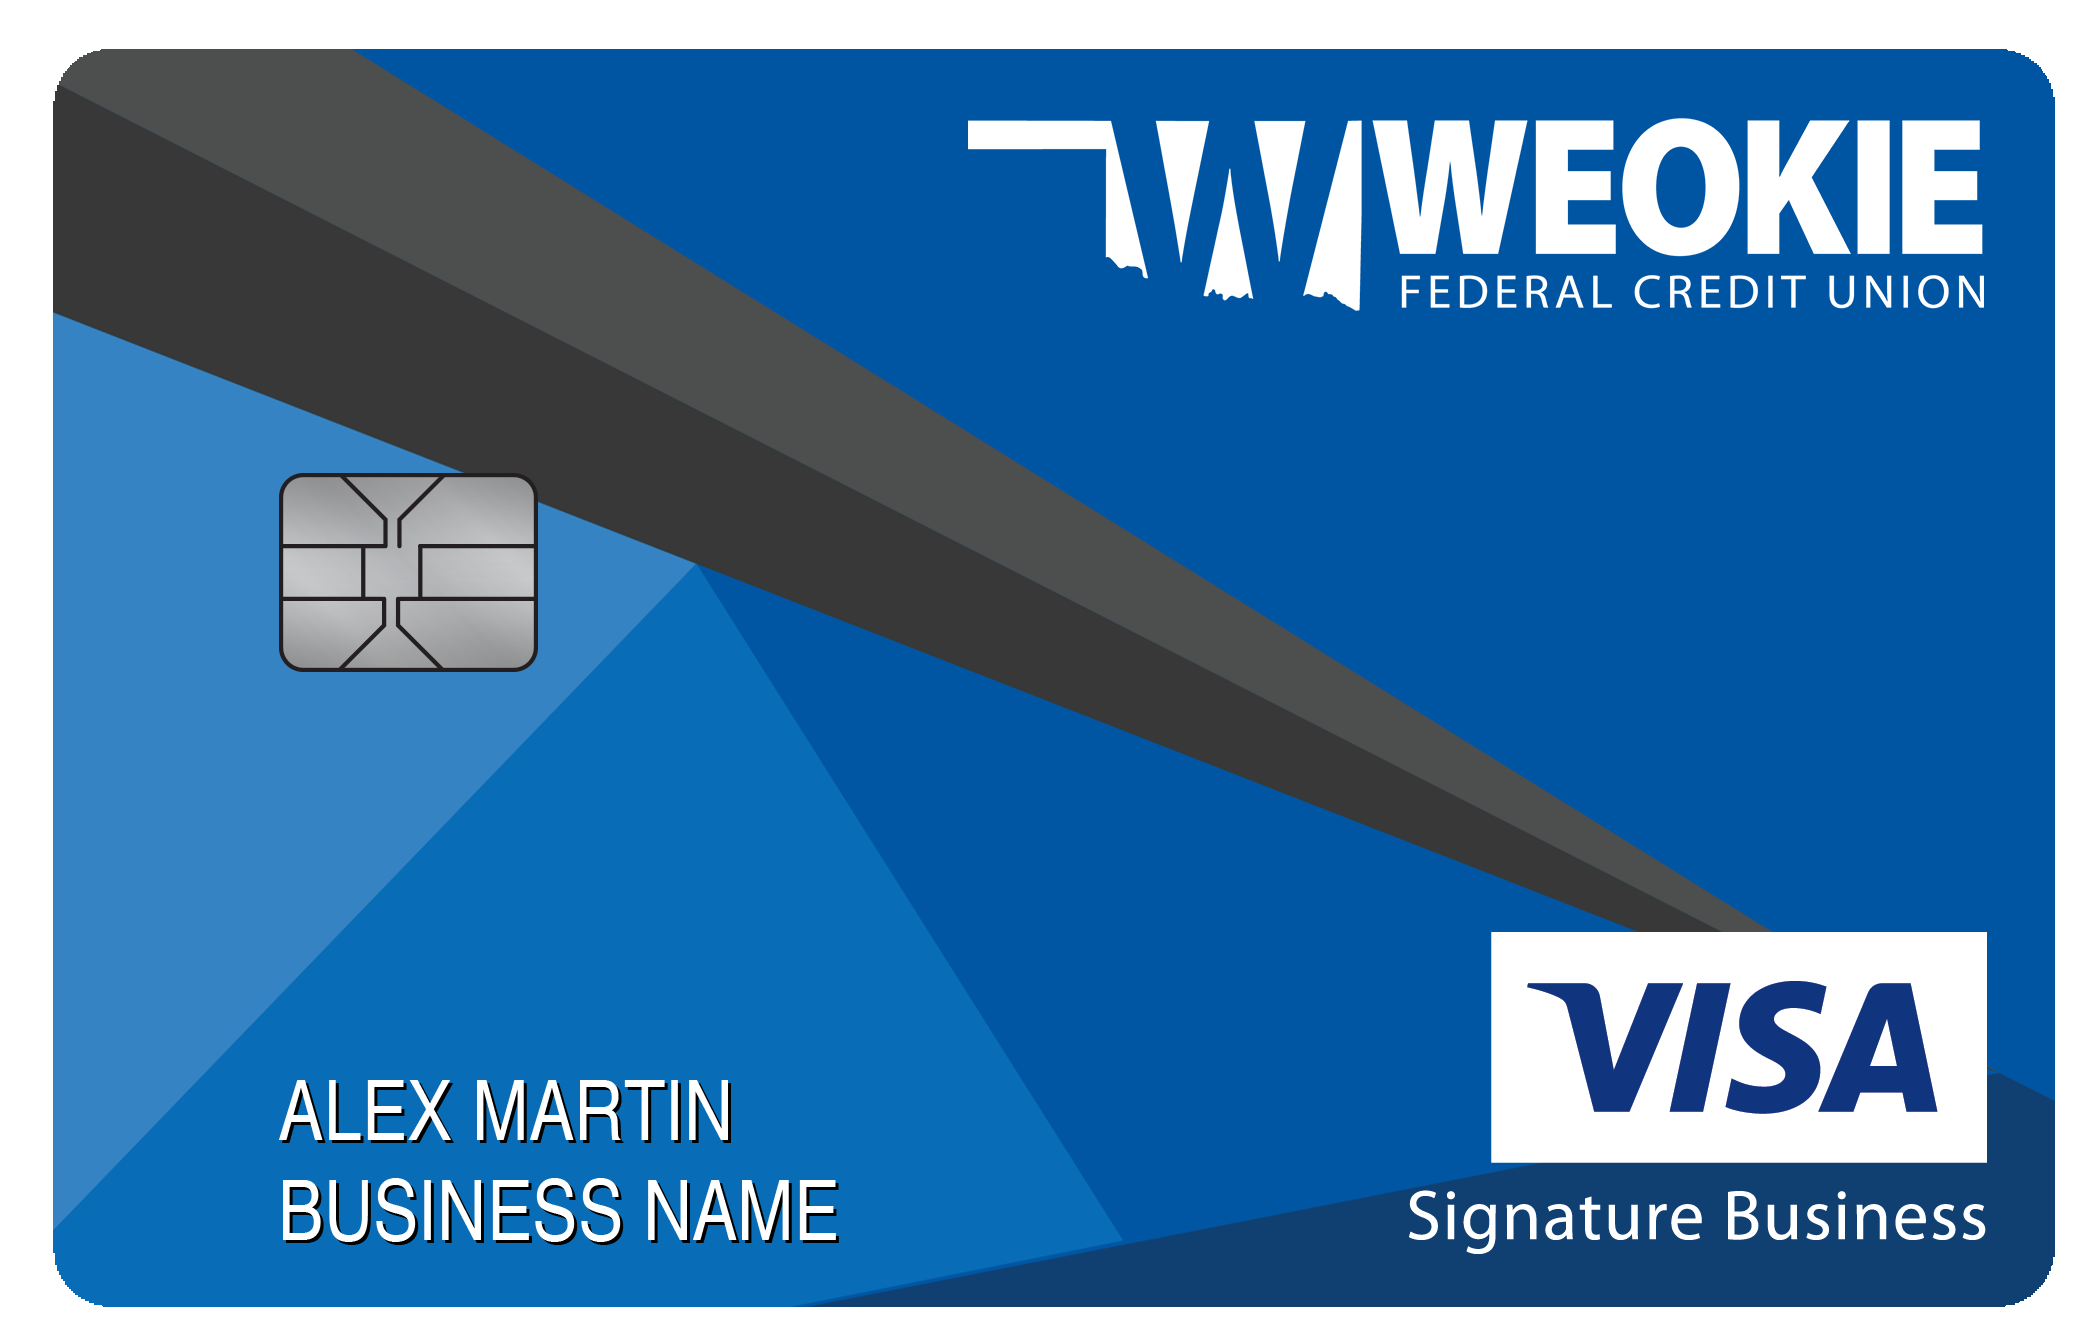 WEOKIE Federal Credit Union Smart Business Rewards Card